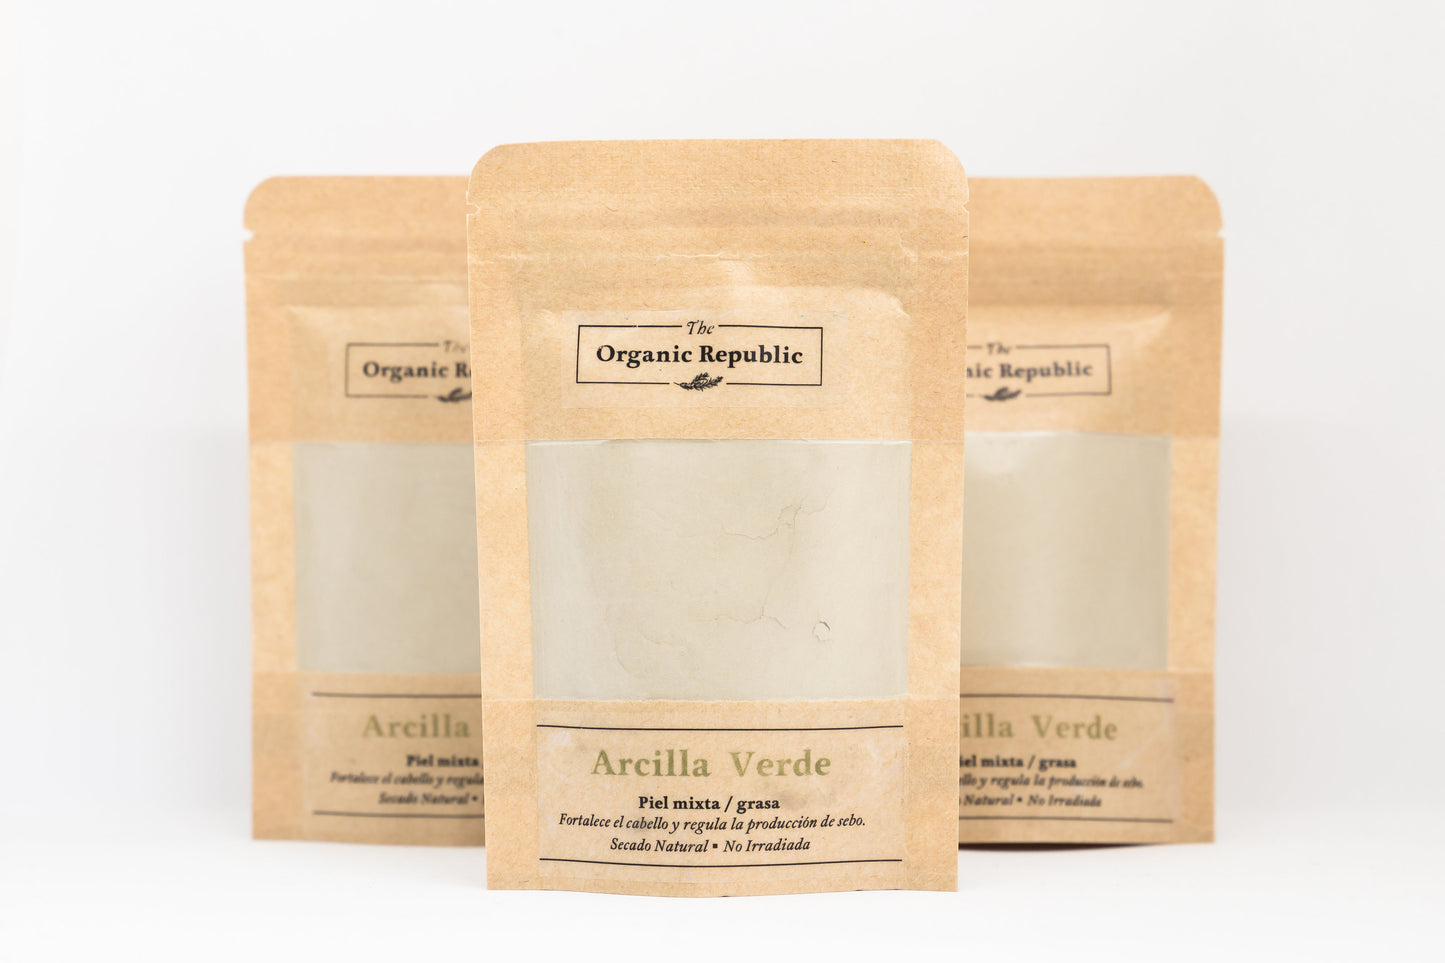 Arcilla Verde - The Organic Republic